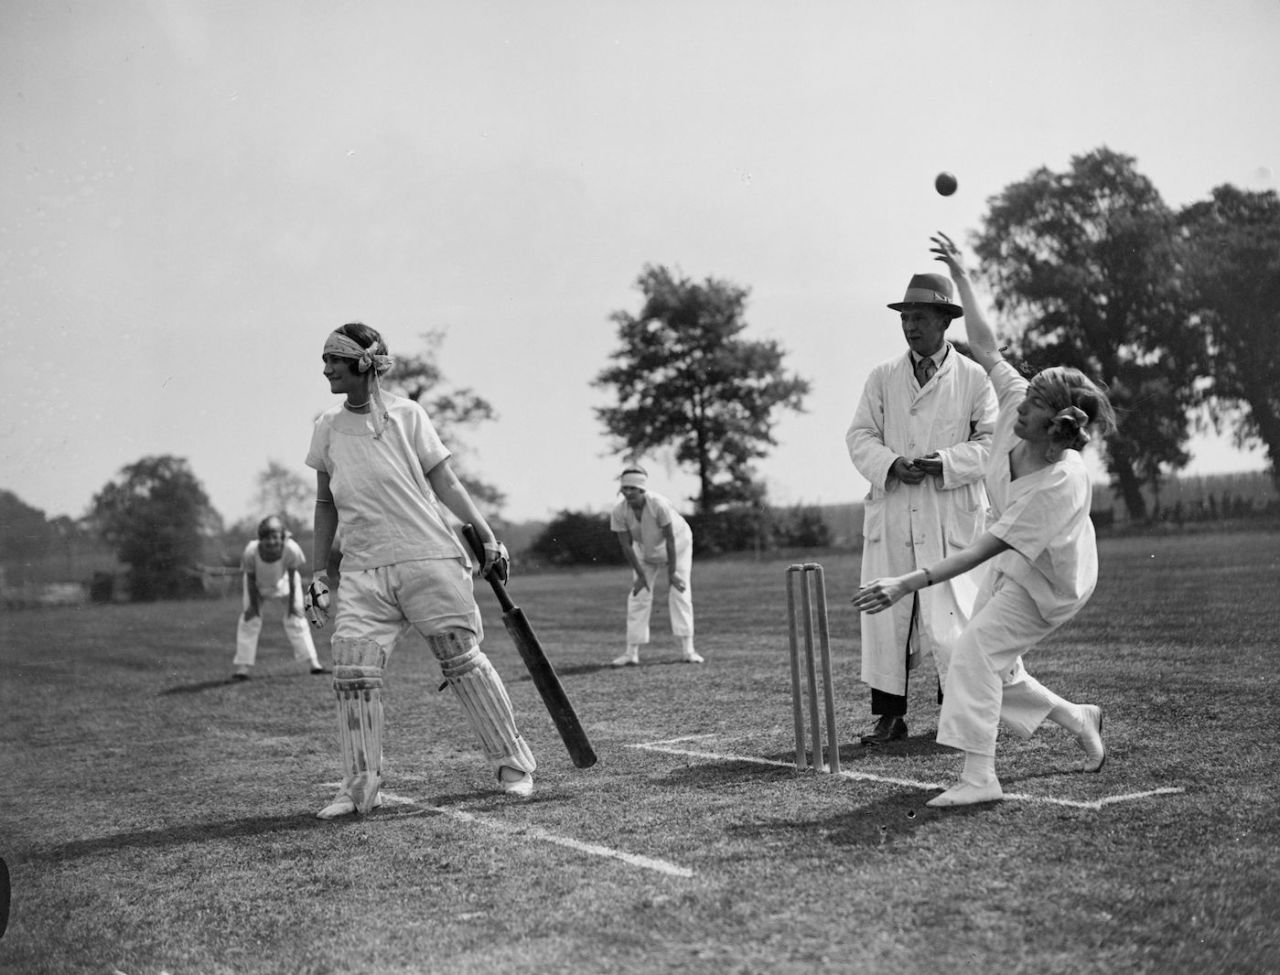 A game of pyjama cricket in progress, May 1927